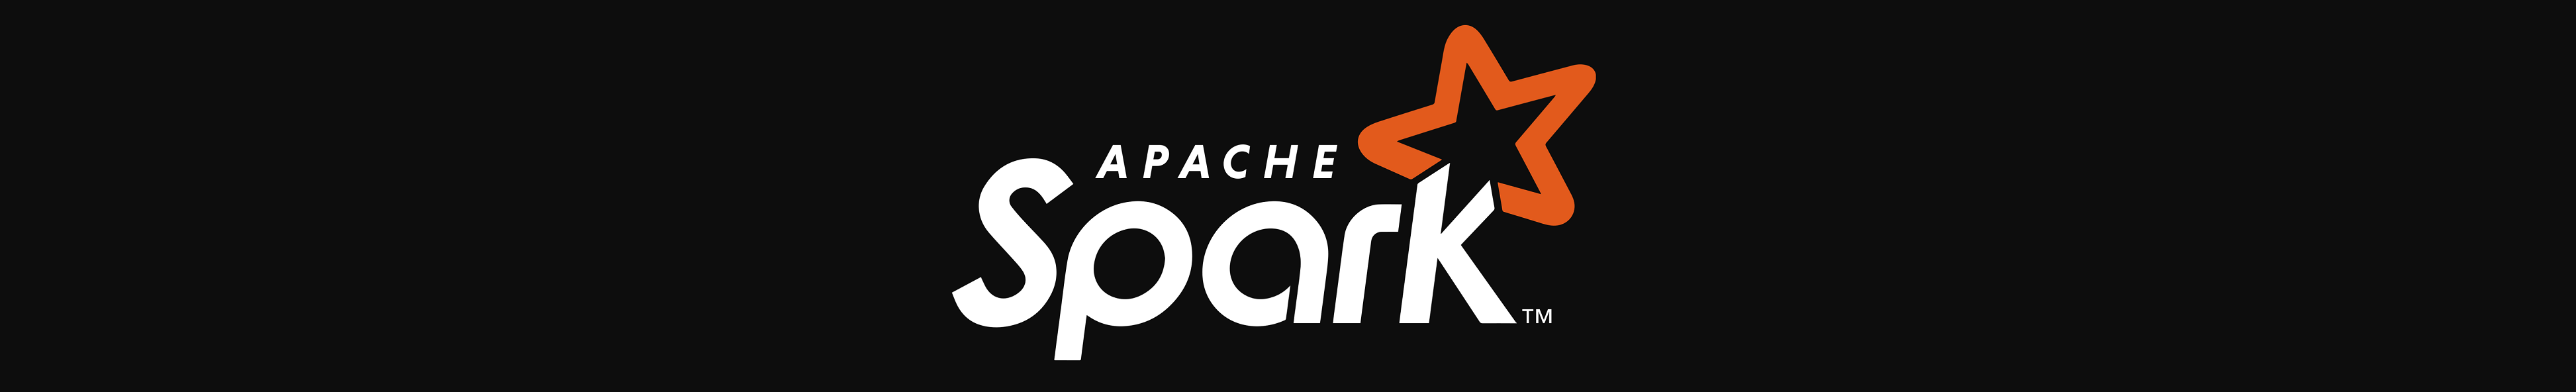 Apache Spark Logo - Top 10 Data Analytics Tools - Edureka